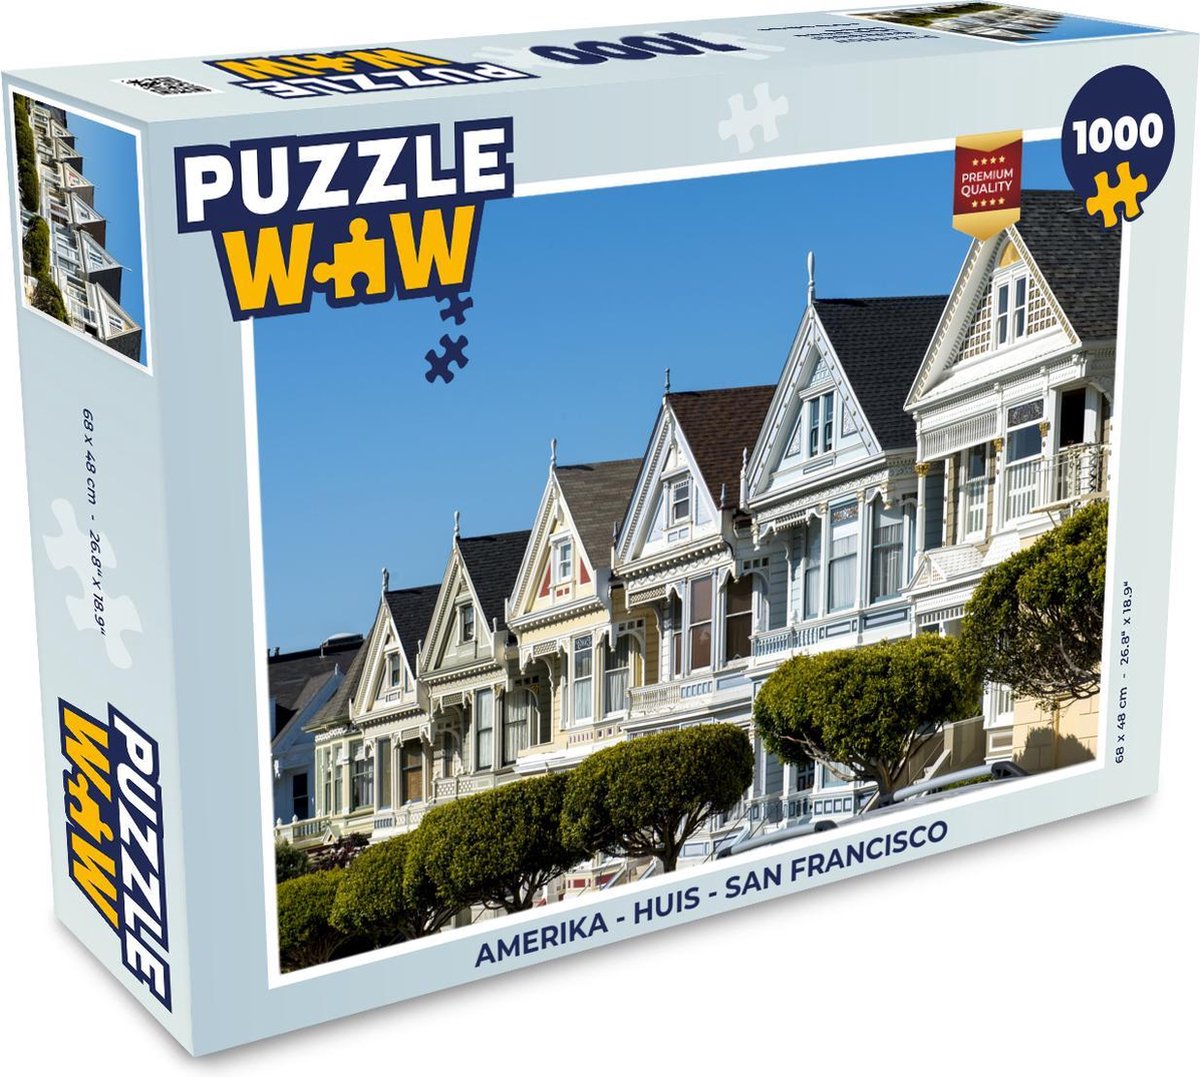 Afbeelding van product PuzzleWow  Puzzel Amerika - Huis - San Francisco - Legpuzzel - Puzzel 1000 stukjes volwassenen - Sinterklaas Cadeau - Kerstcadeau